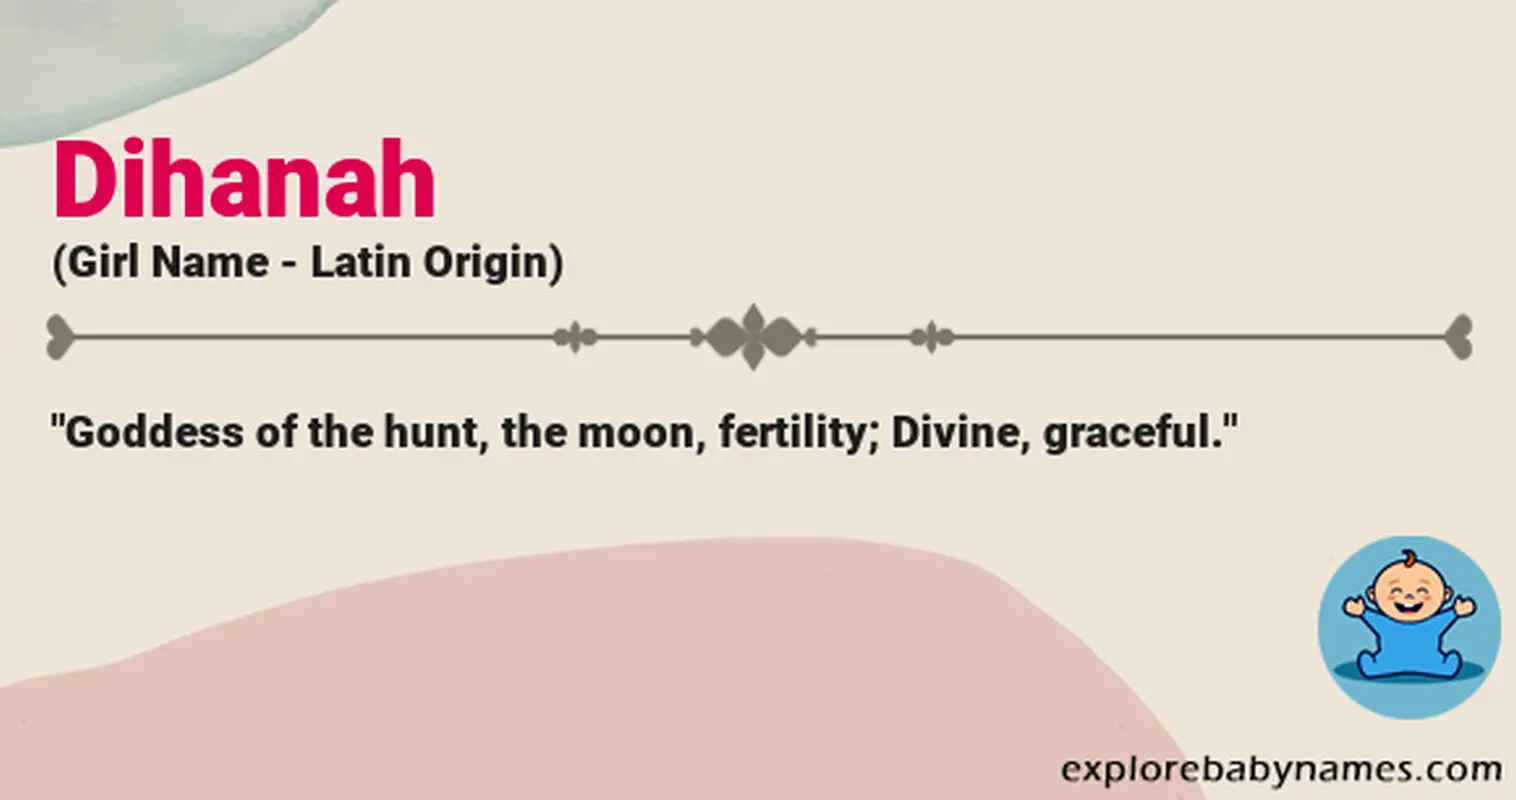 Meaning of Dihanah